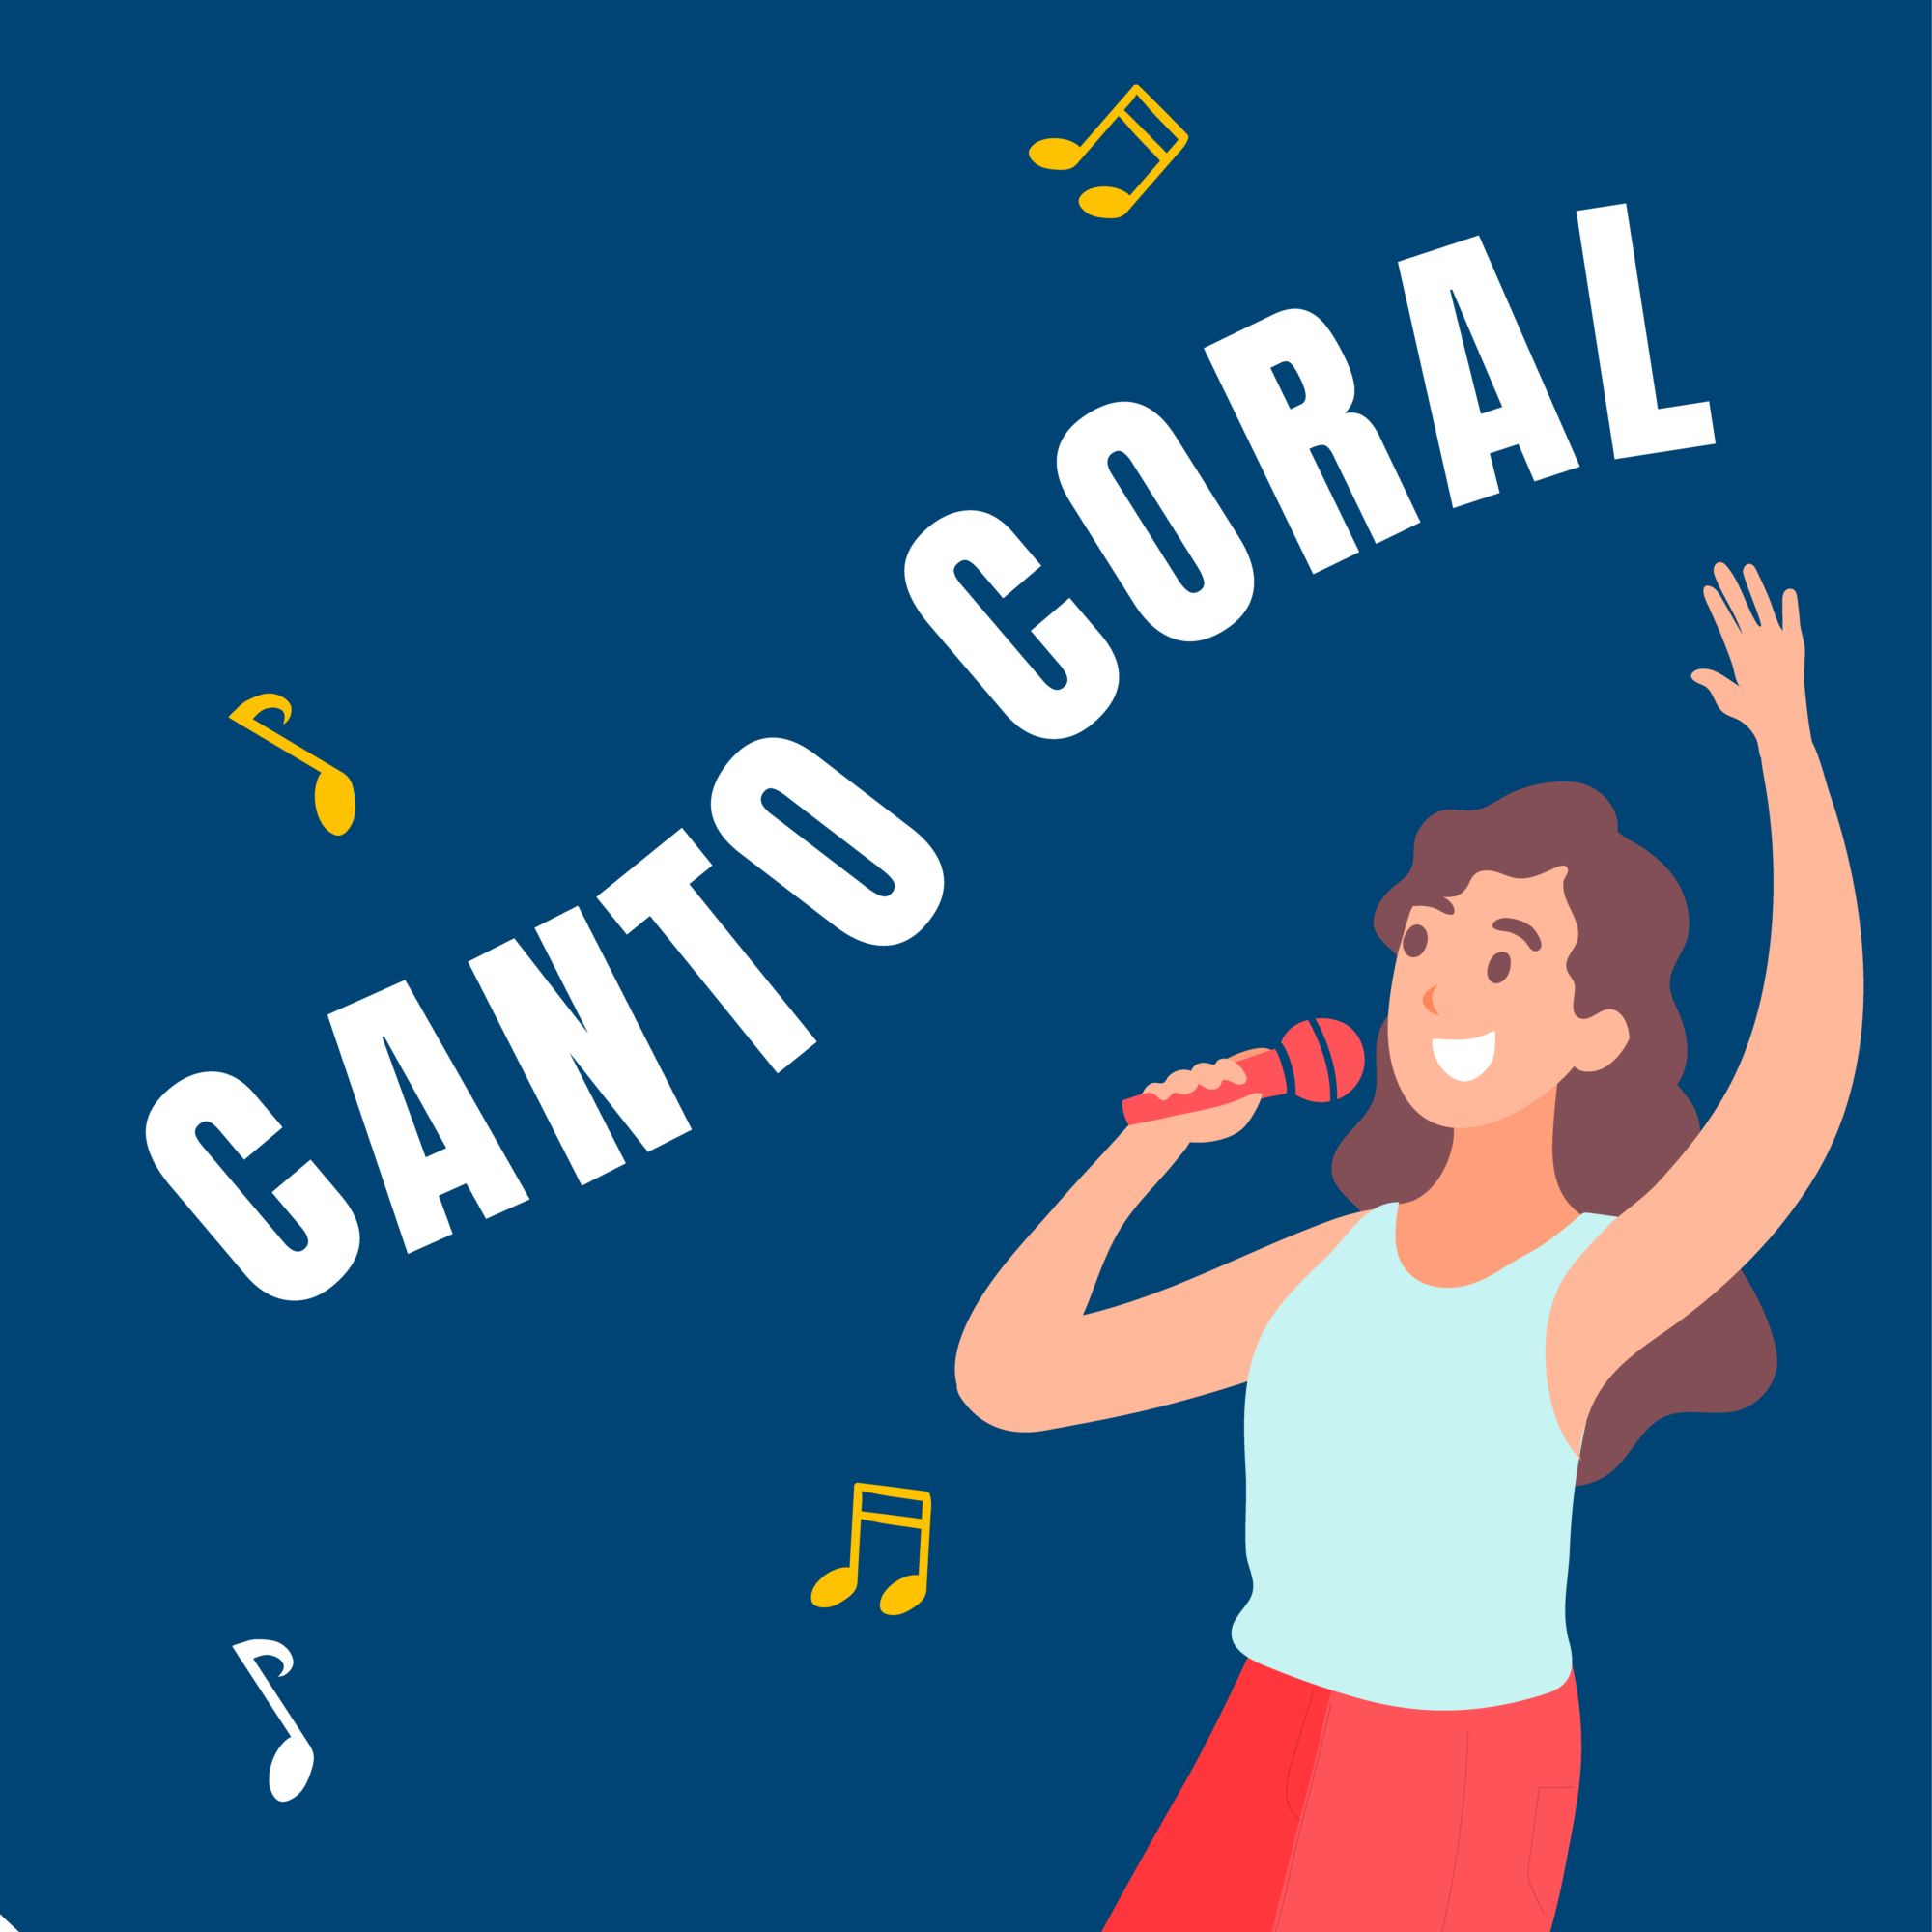 Canto Coral